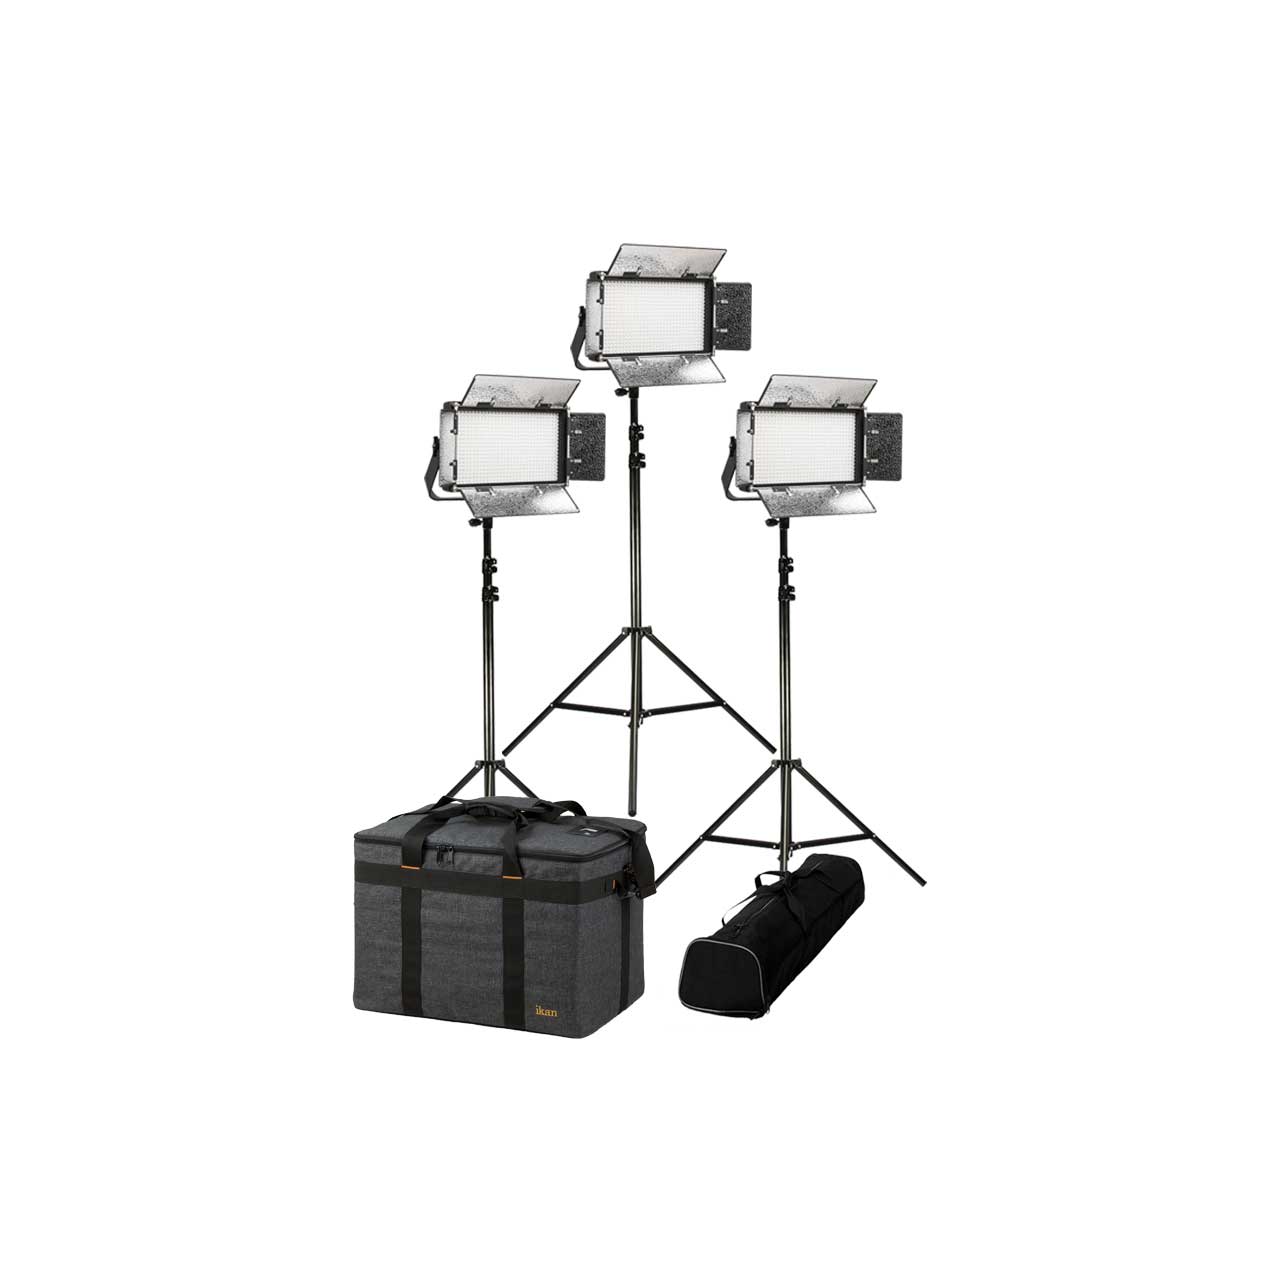 ikan RB5-3PT-KIT Light Kit with 3x Rayden Bi-Color Half x 1 LED Lights IKAN-RB5-3PT-KIT